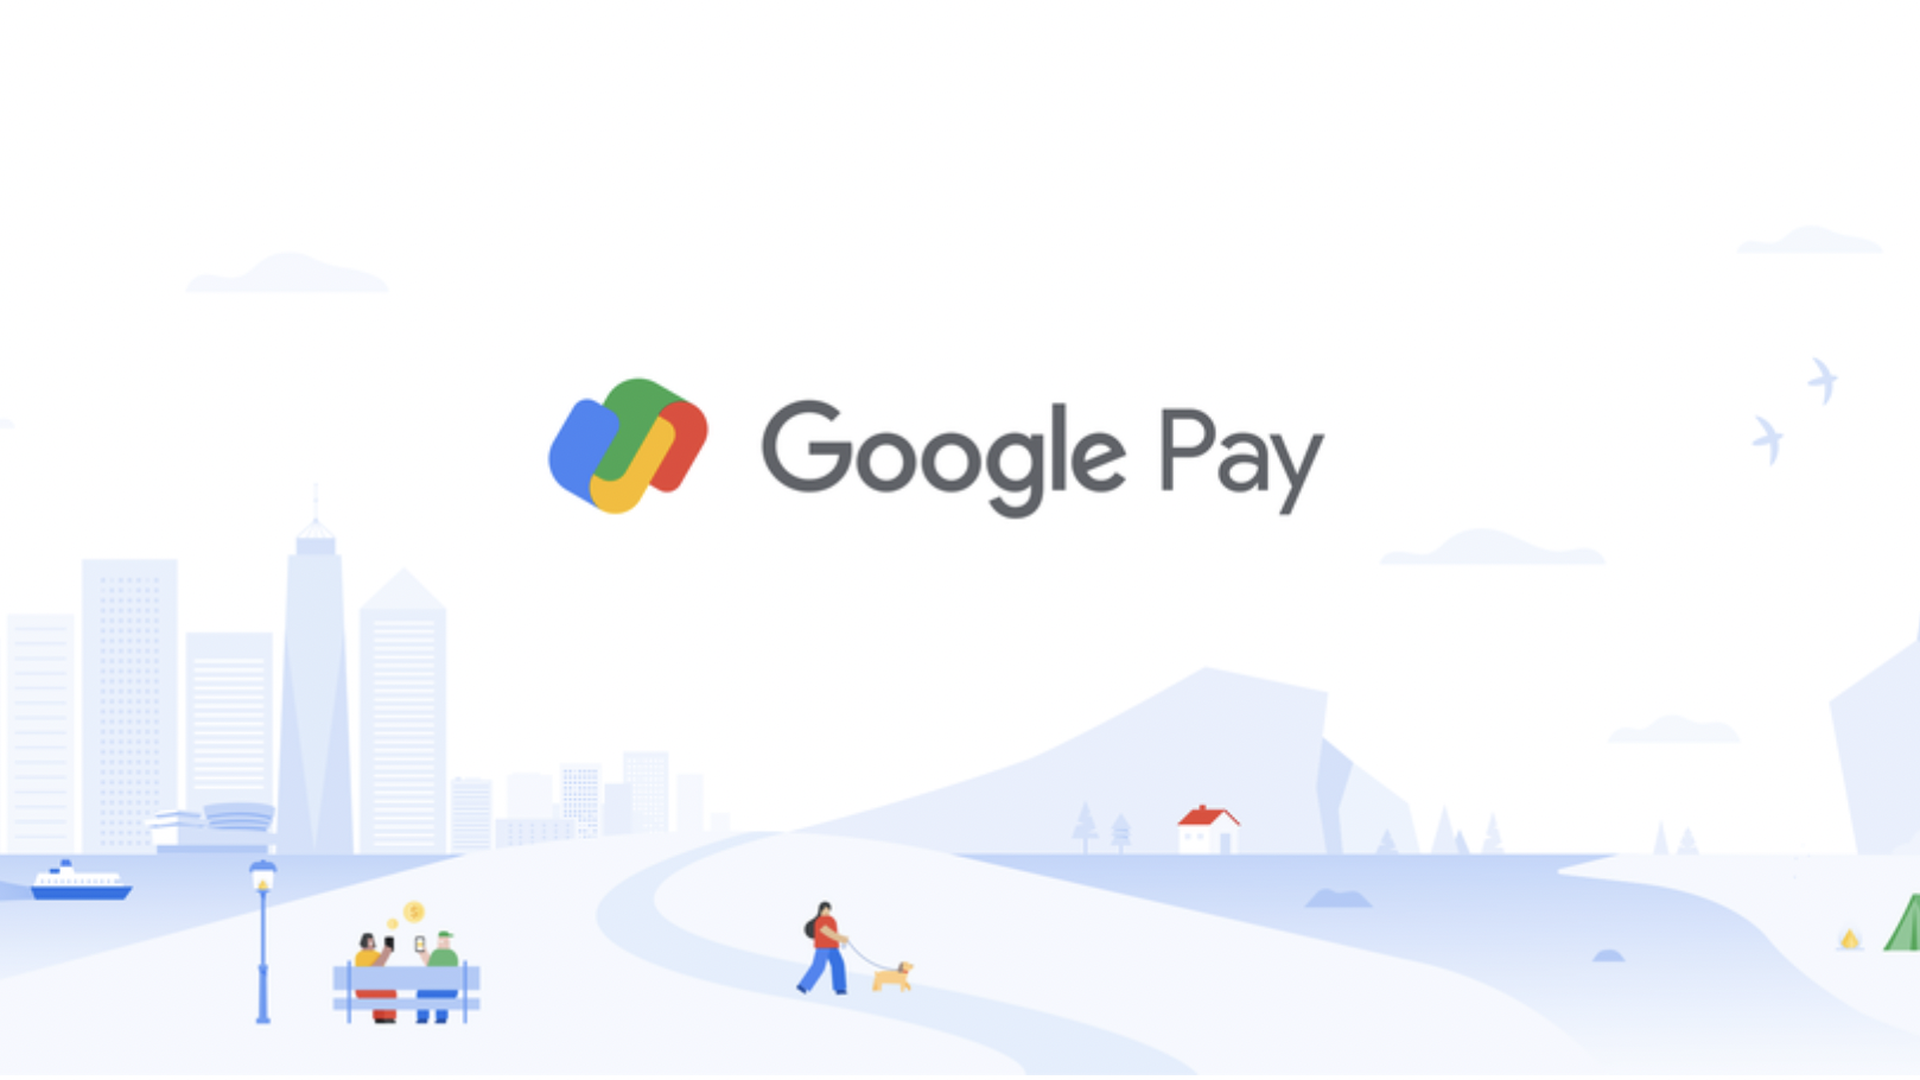 Illustration of Google Pay logo